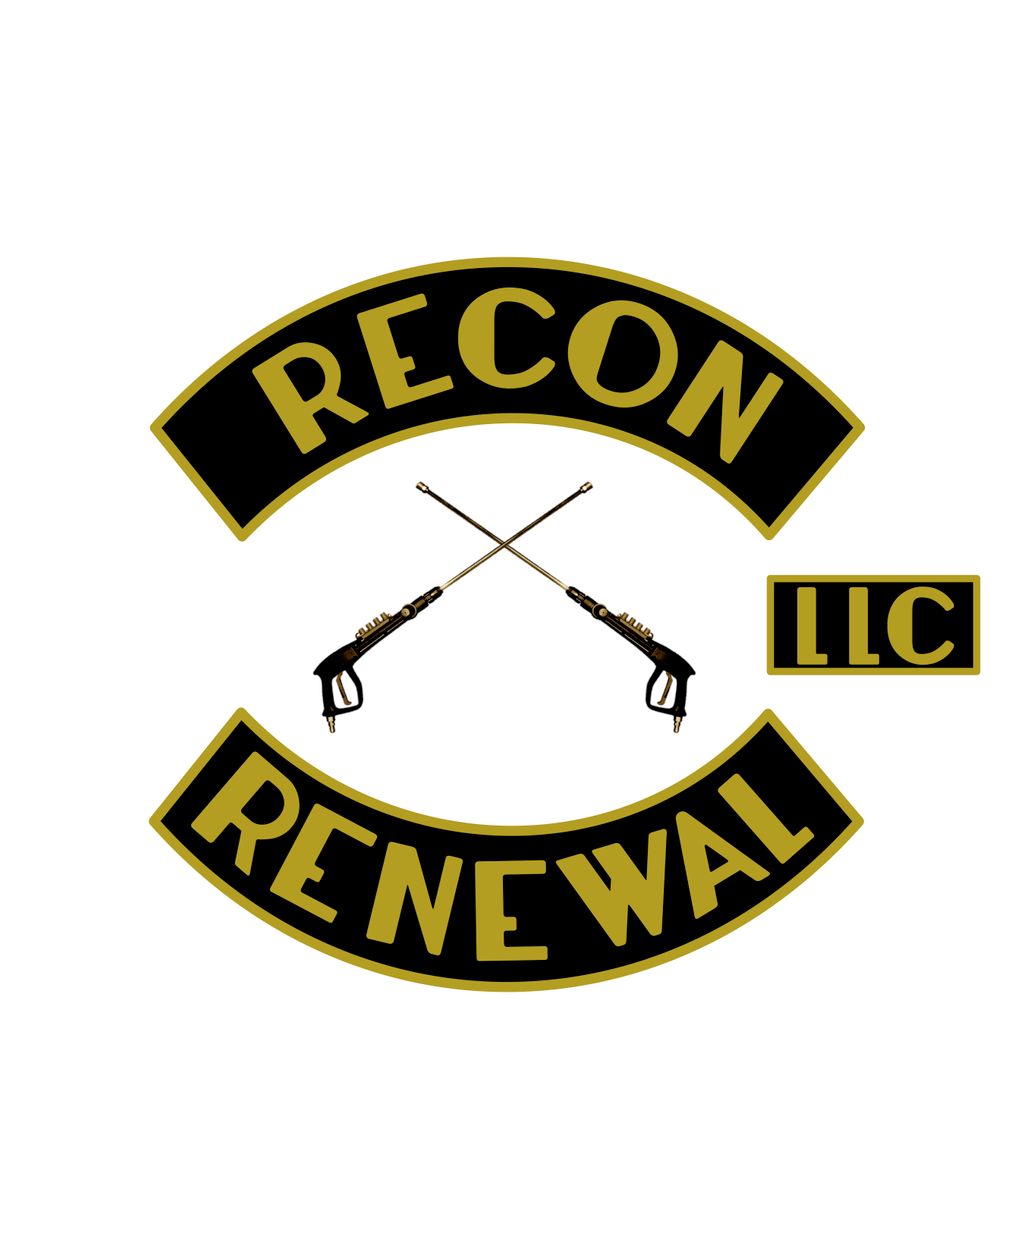 Recon Renewal LLC